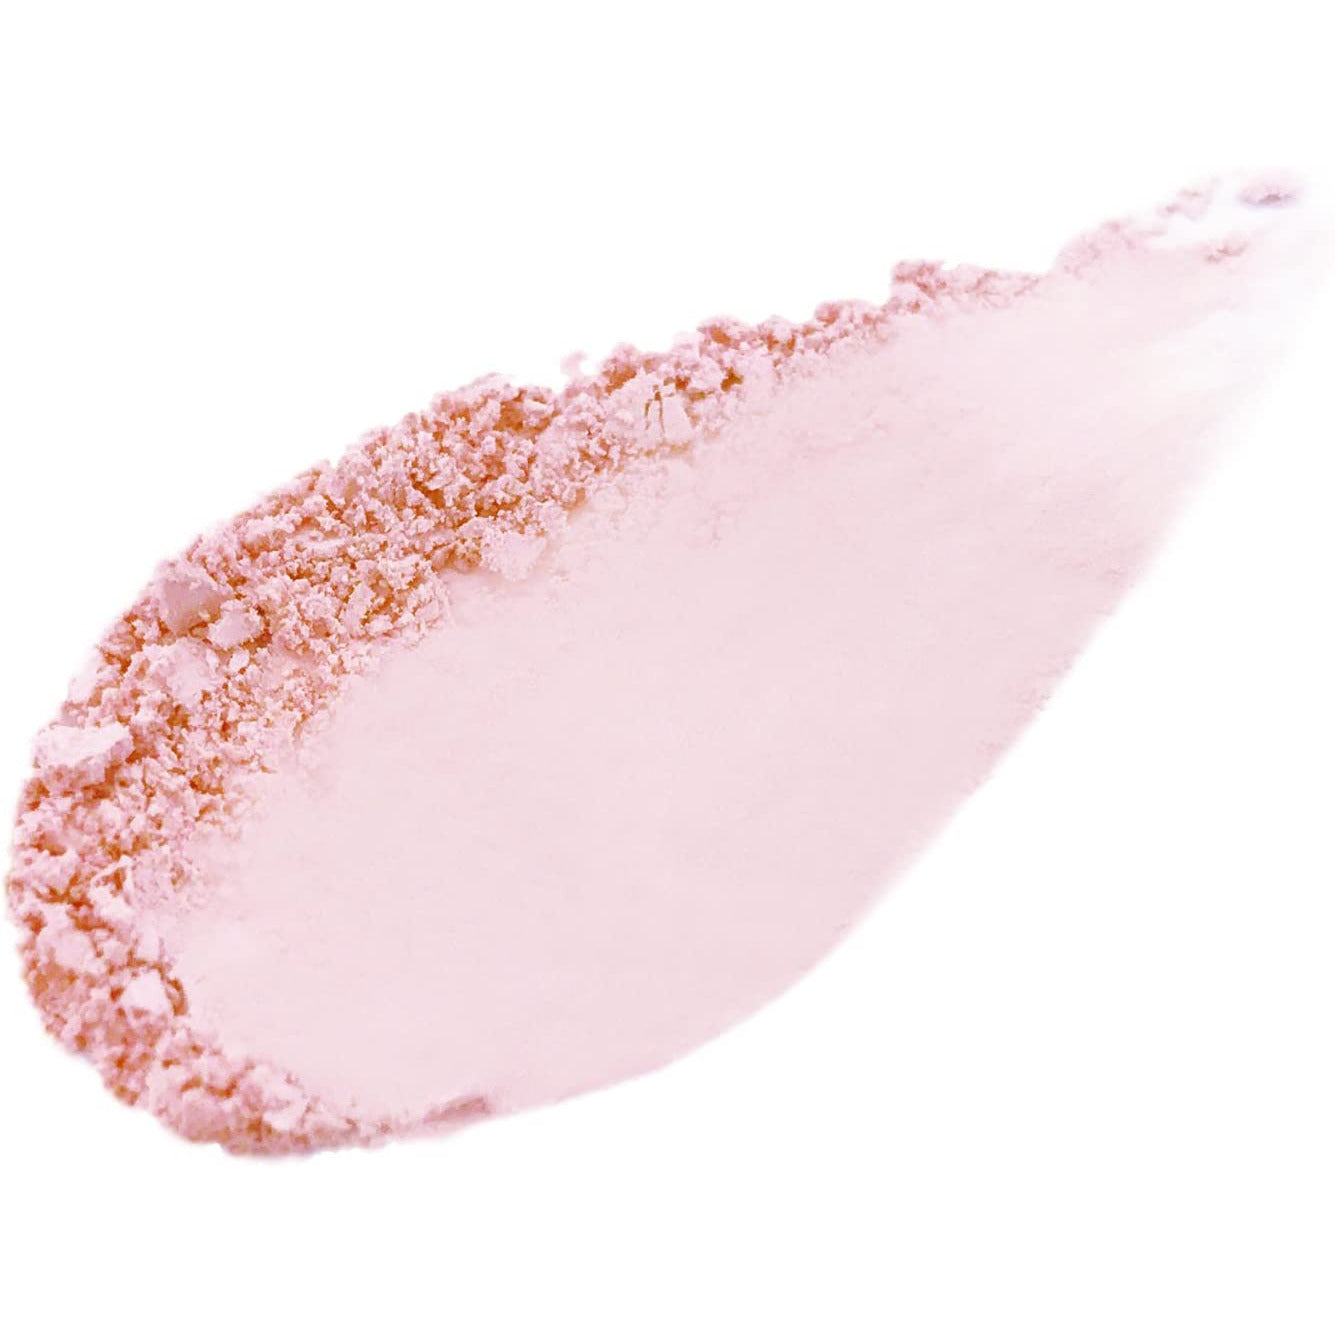 SANA Skin Anniversary Skin Care Powder Nude Pink 10g